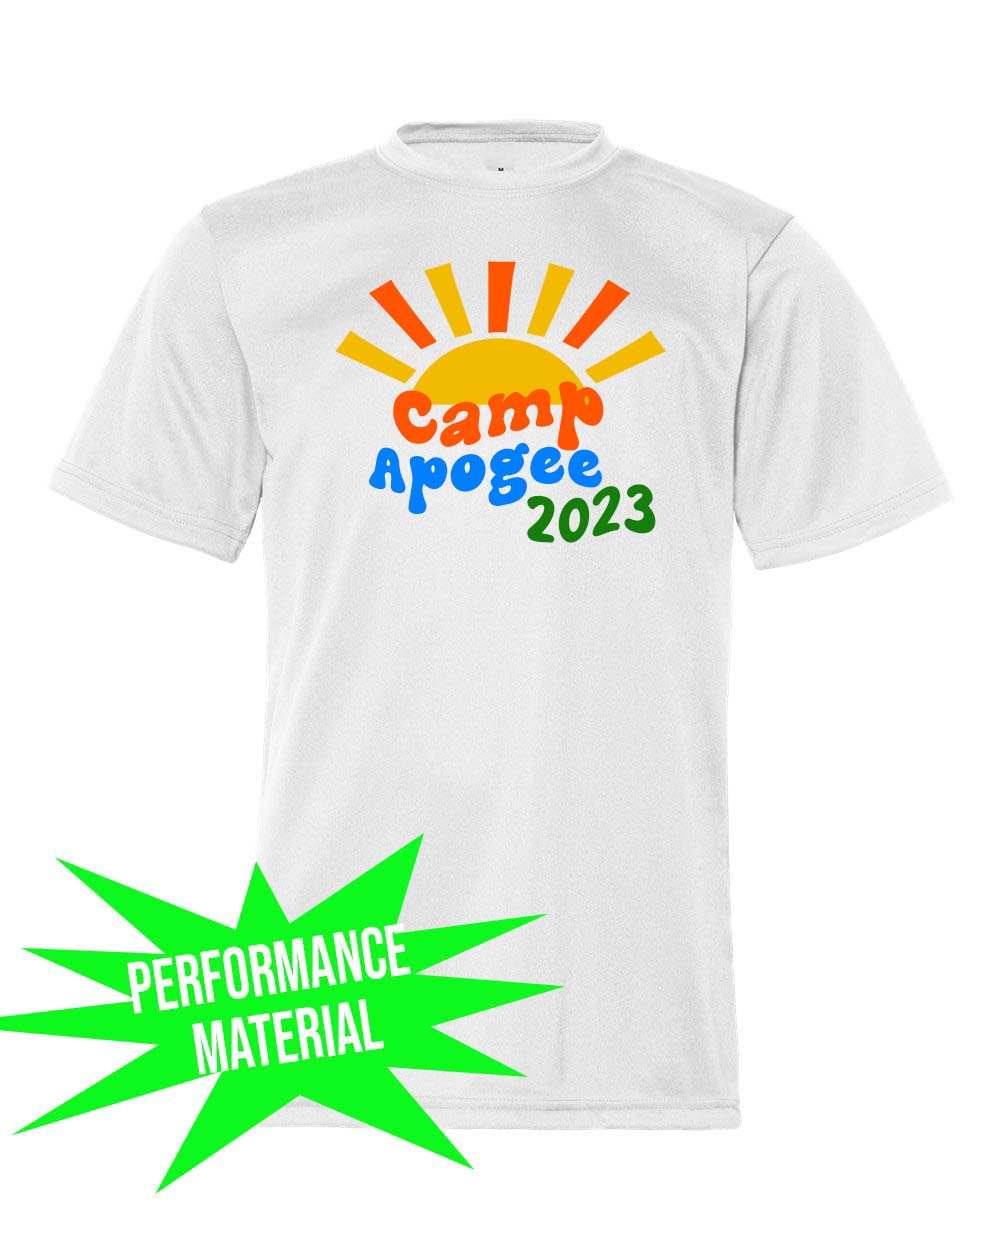 Hilltop Camp Performance Material design 2 T-Shirt